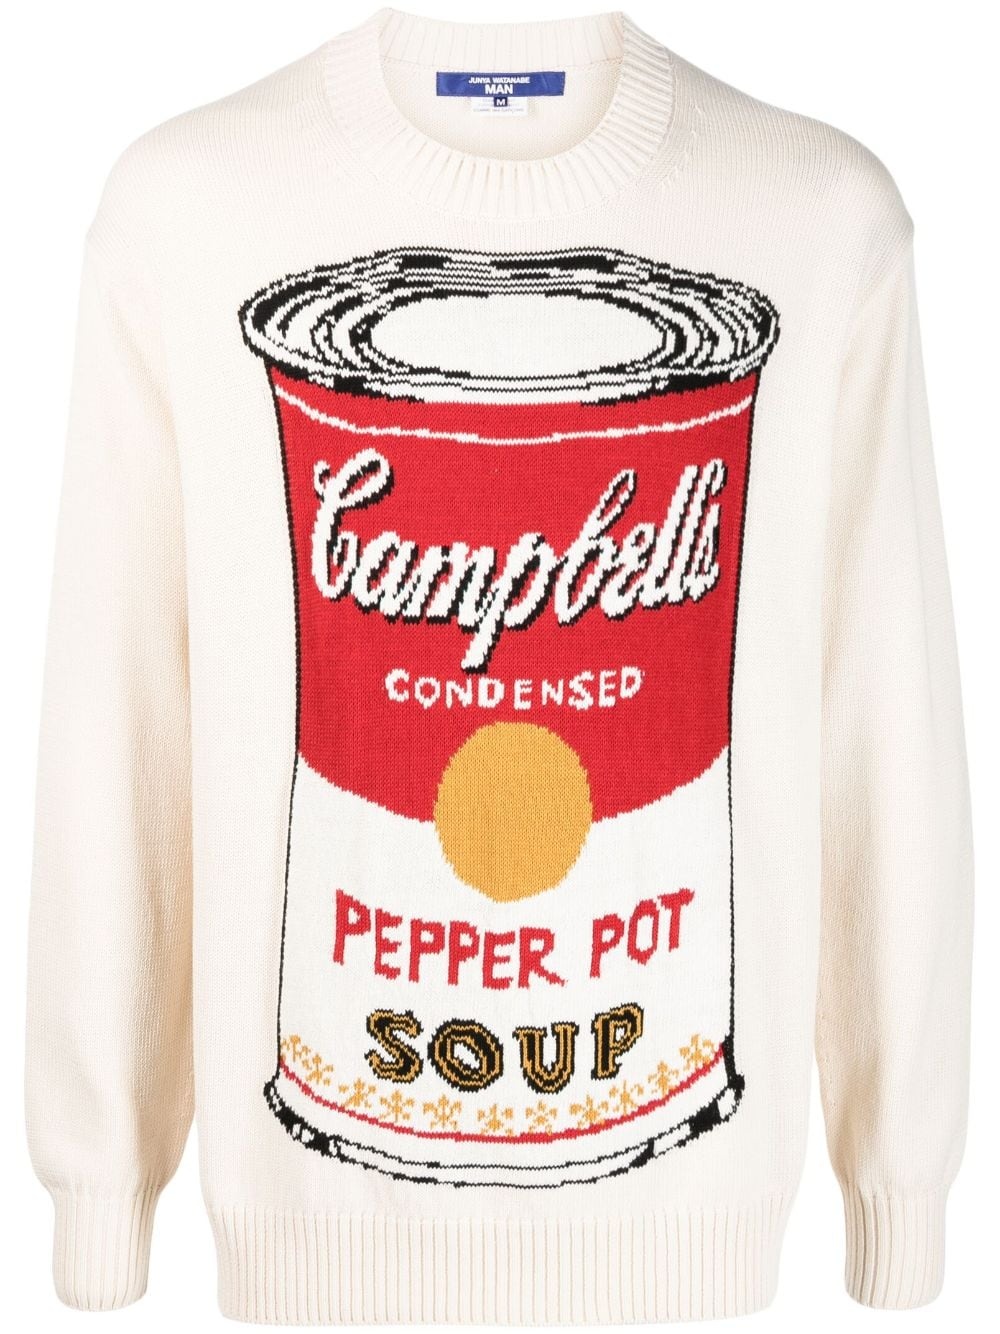 Campbell Soup print T-shirt - 1